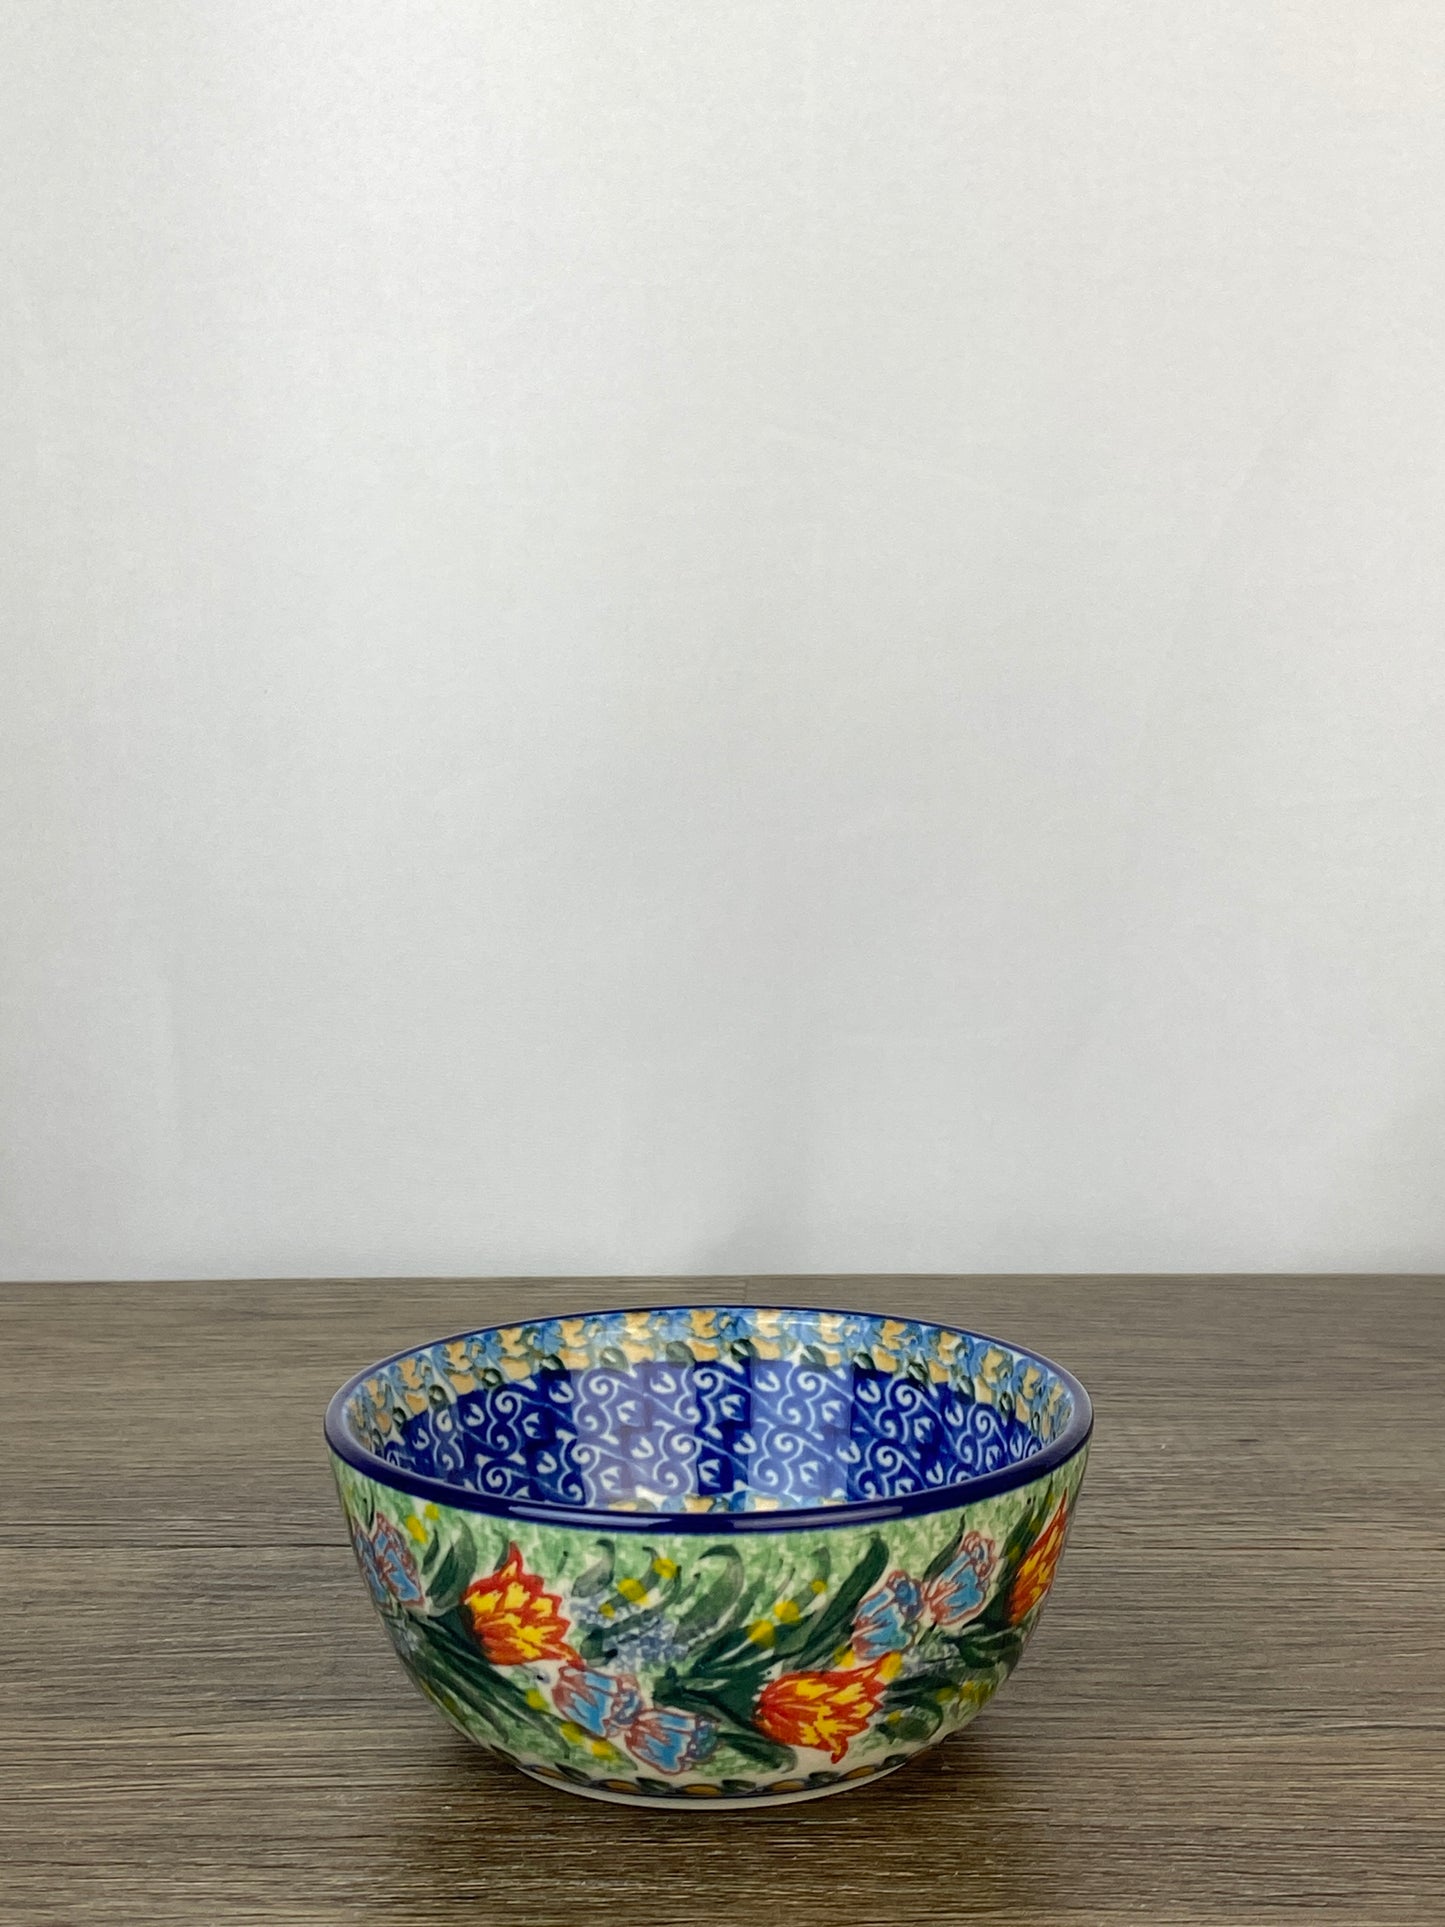 SALE Small Unikat Cereal / Dessert Bowl - Shape 17 - Pattern U3651